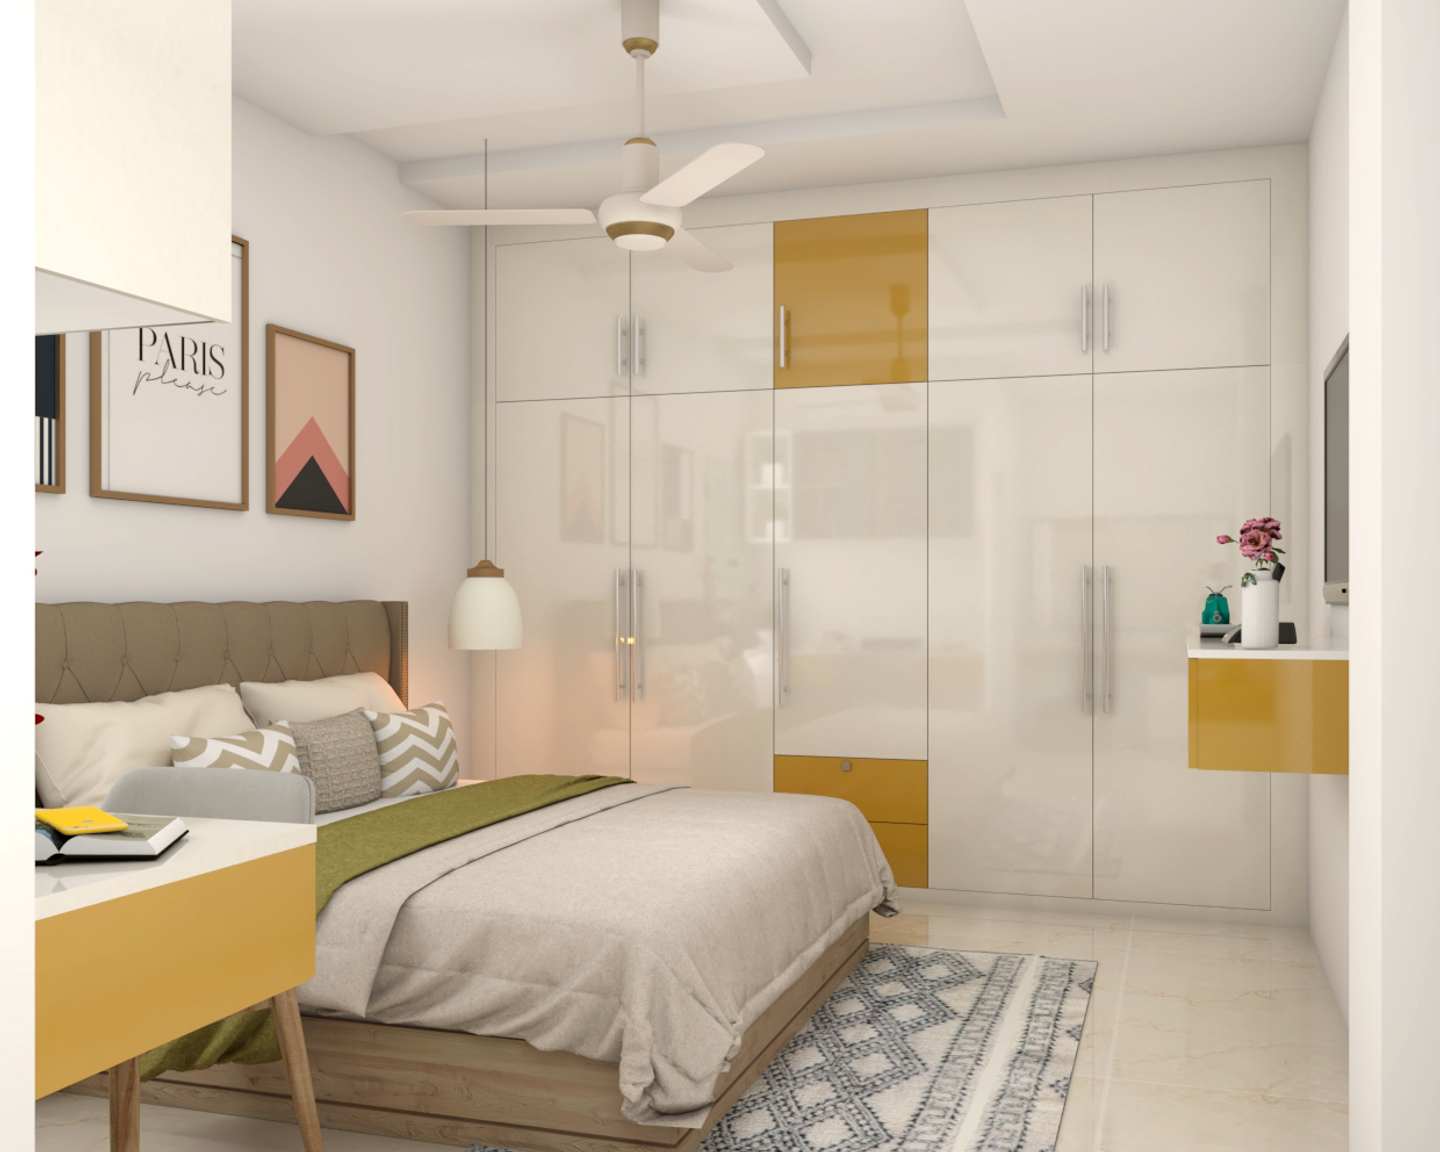 Contemporary Spacious Master Bedroom Interior Design with Glossy Wardrobe - Livspace